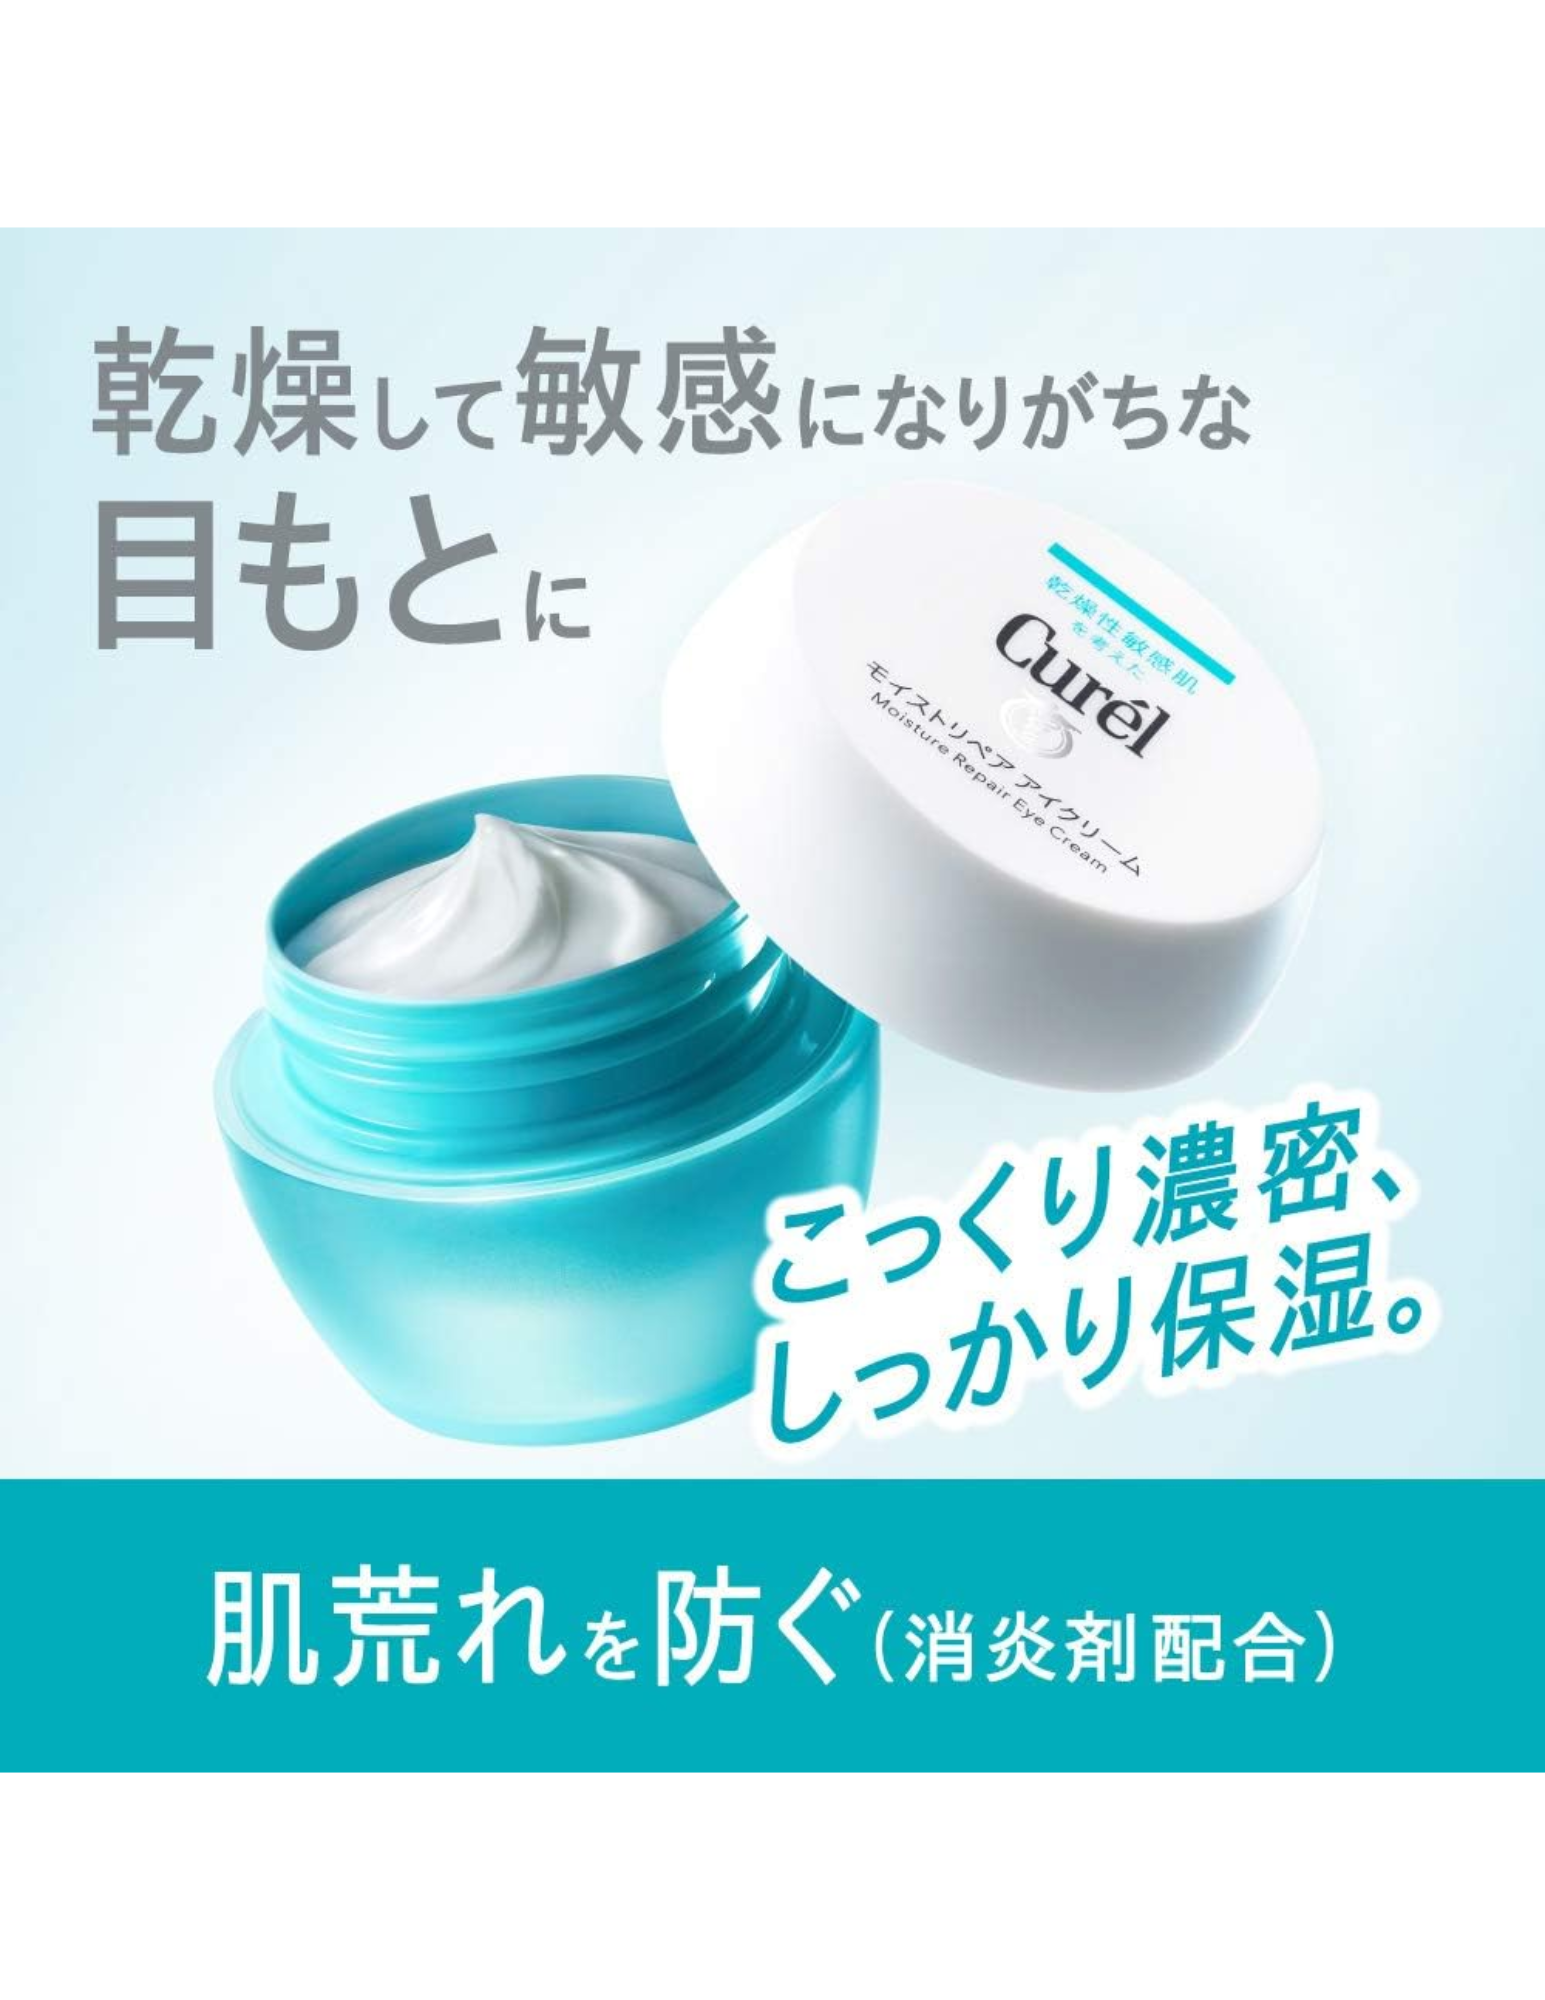 Kao Curel Moisture Repair Eye Cream